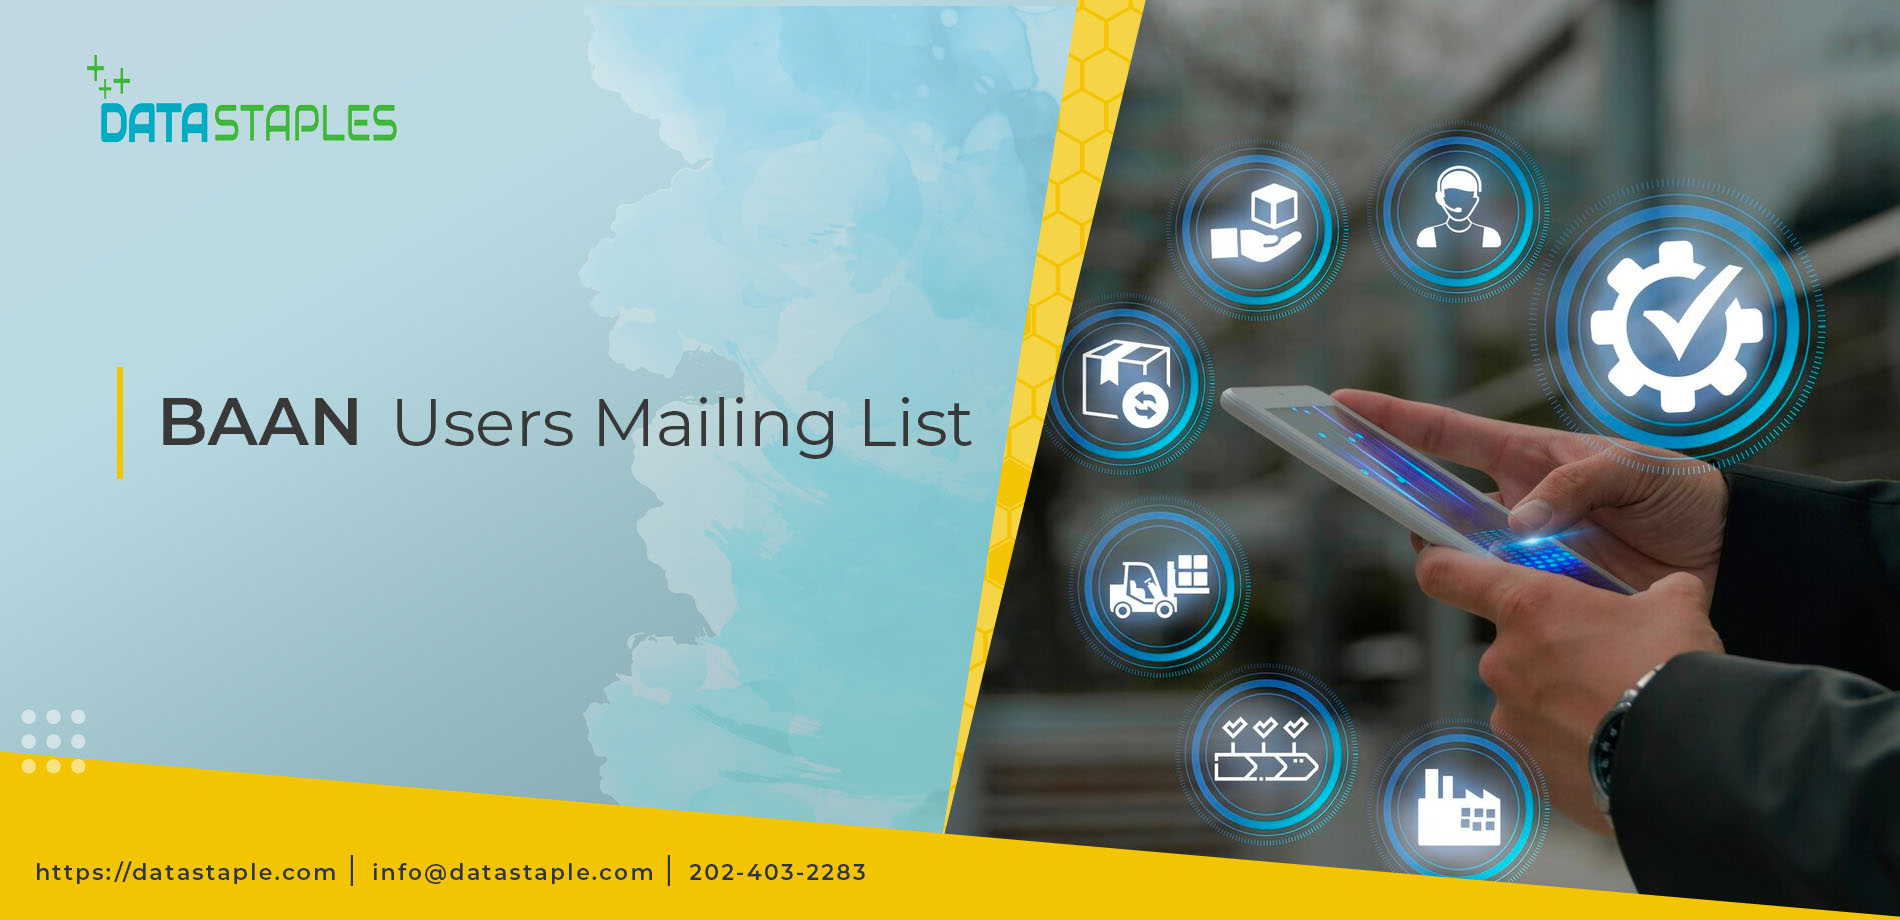 BAAN Users Mailing List | DataStaples